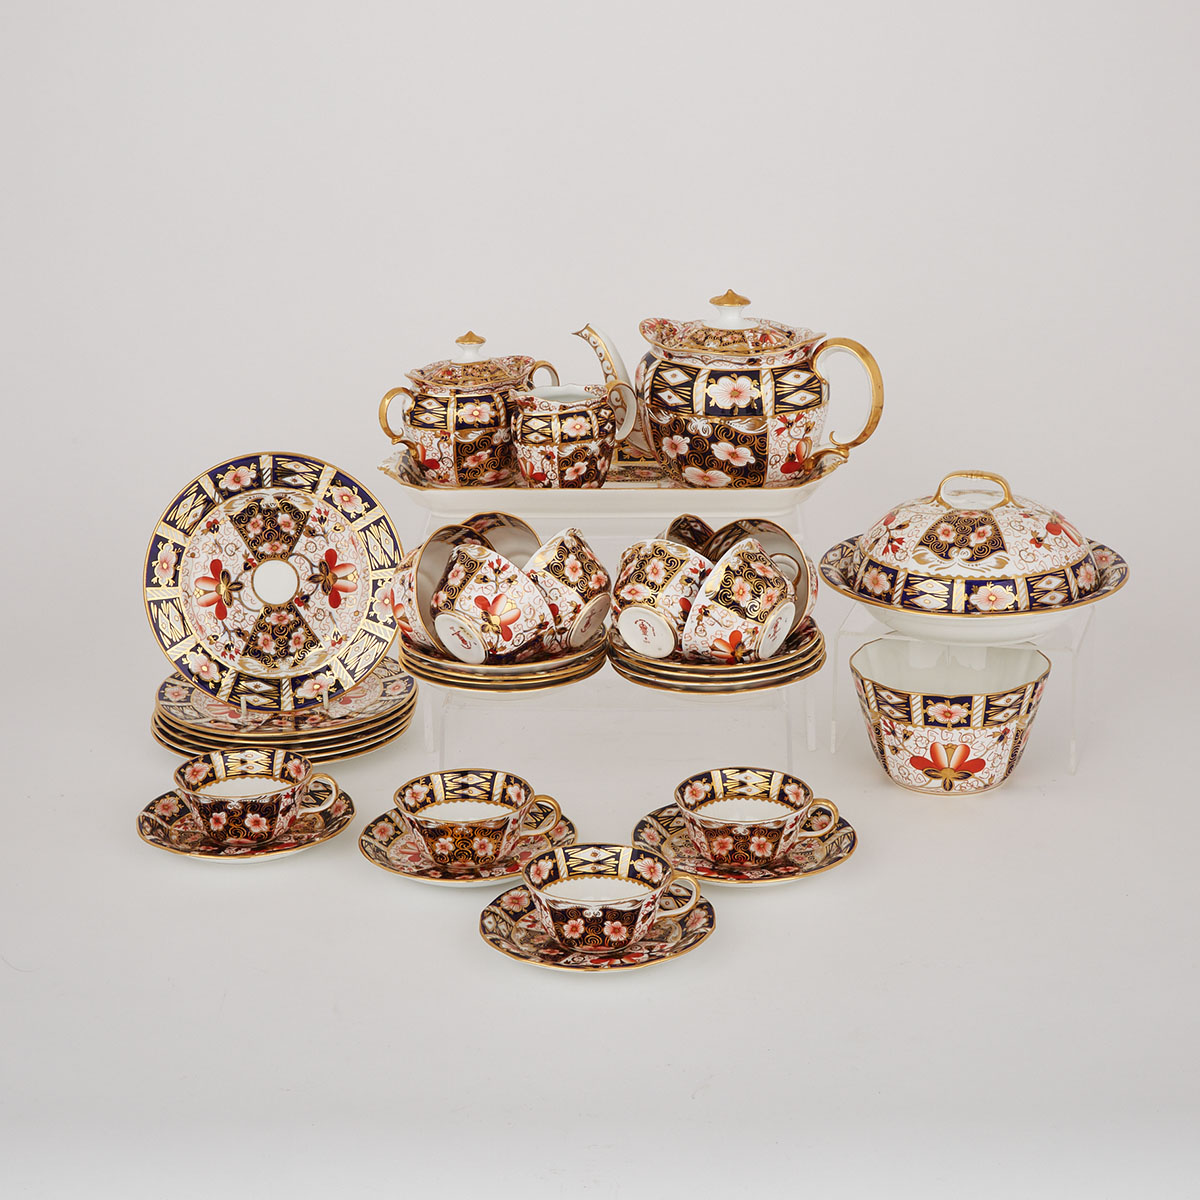 Royal Crown Derby ‘Imari’ (2451) Pattern Tea Service, 20th century